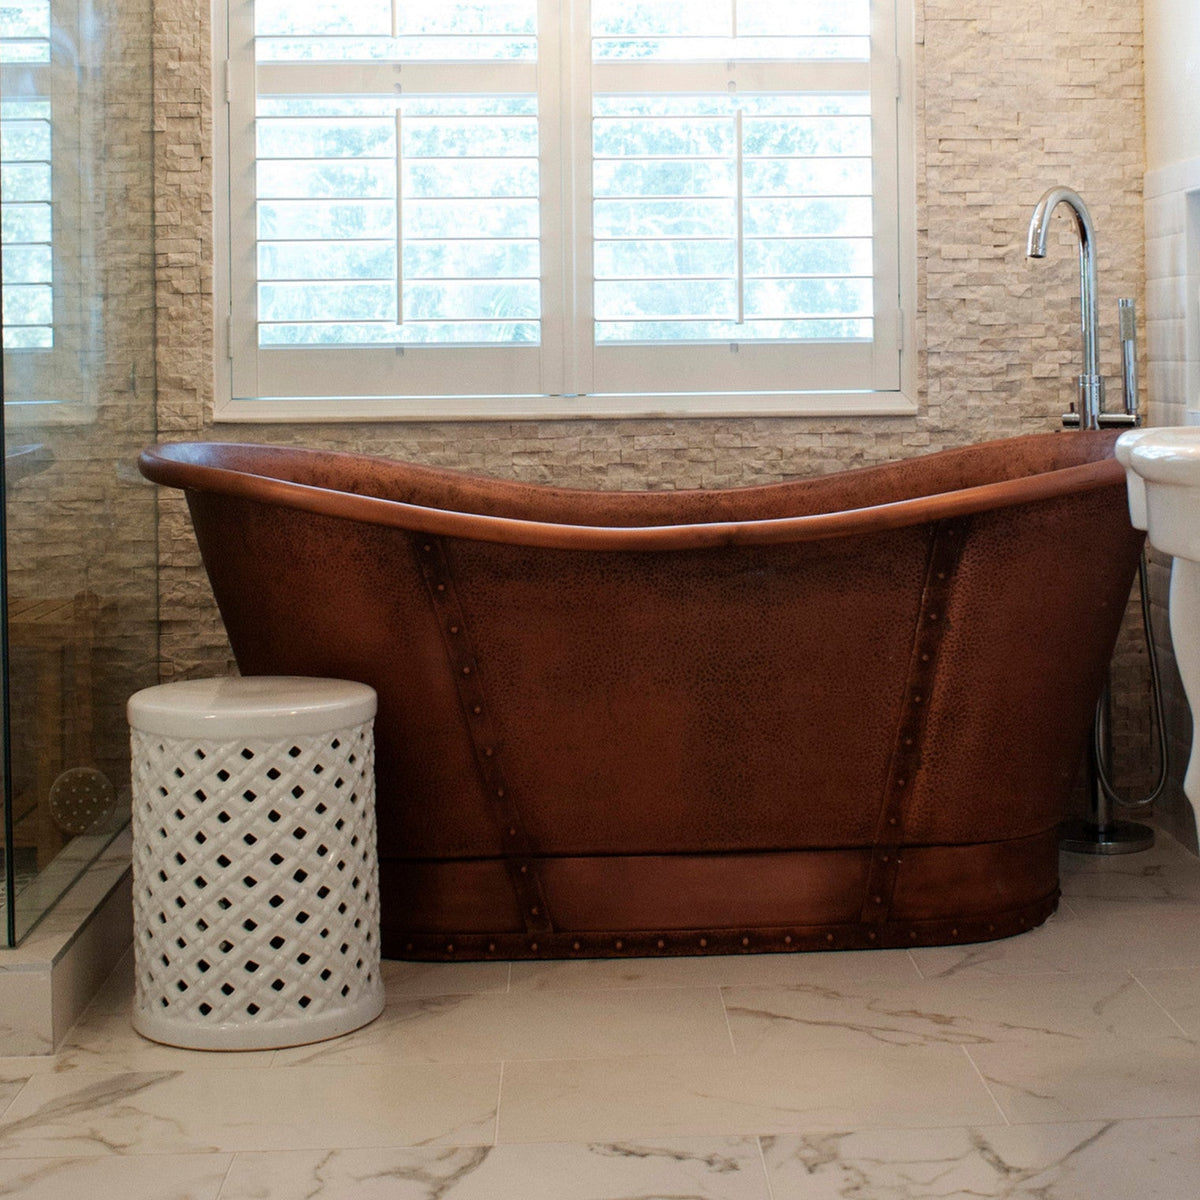 Akicon Copper Double-Slipper Roll-Top Bathtub w/Pedestal AKB70012-C